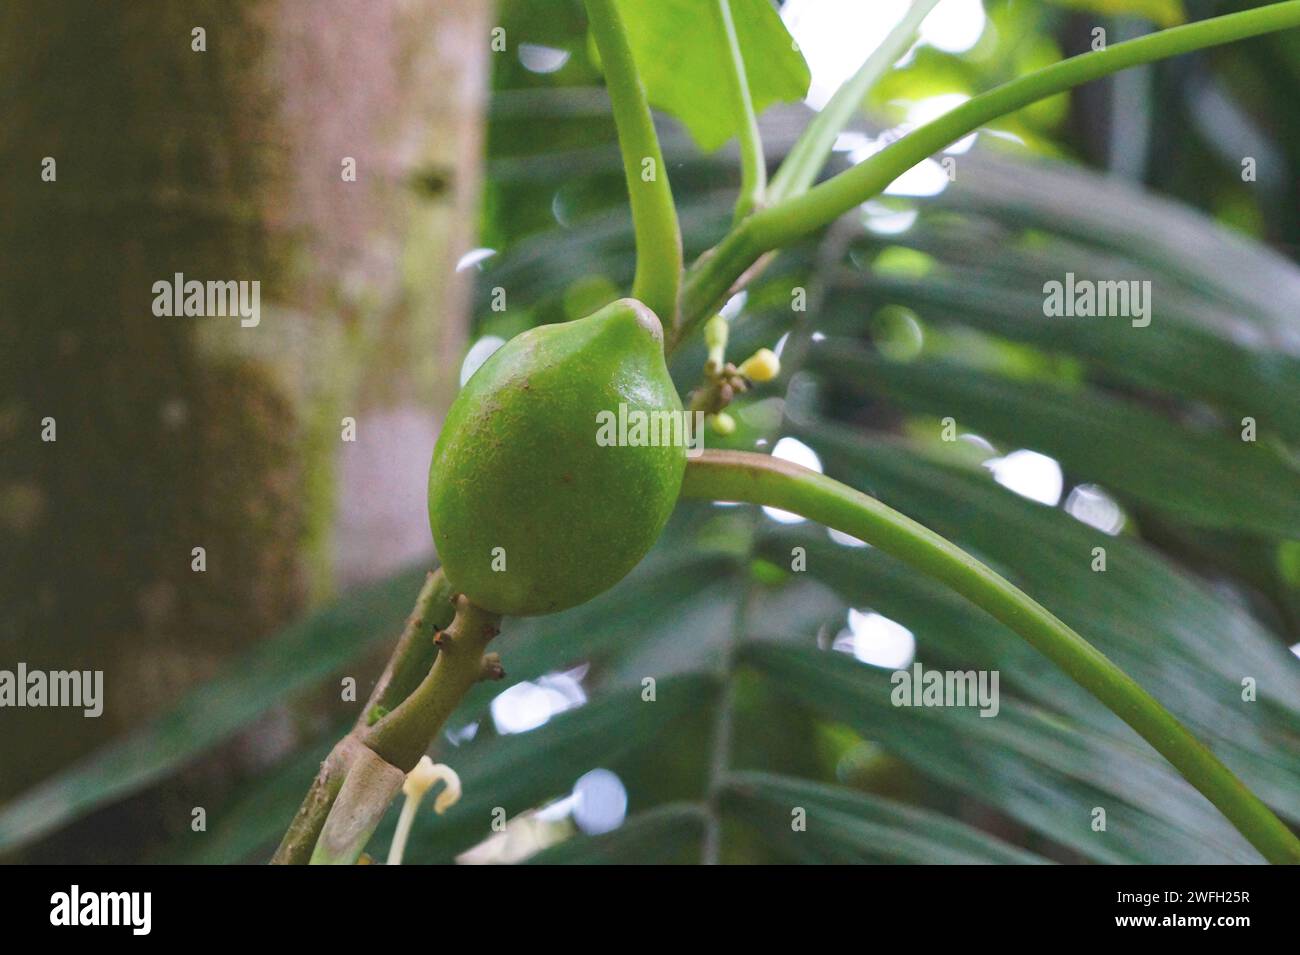 papaya, papaw, paw paw, mamao, tree melon (Carica papaya), young fruit on a tree Stock Photo